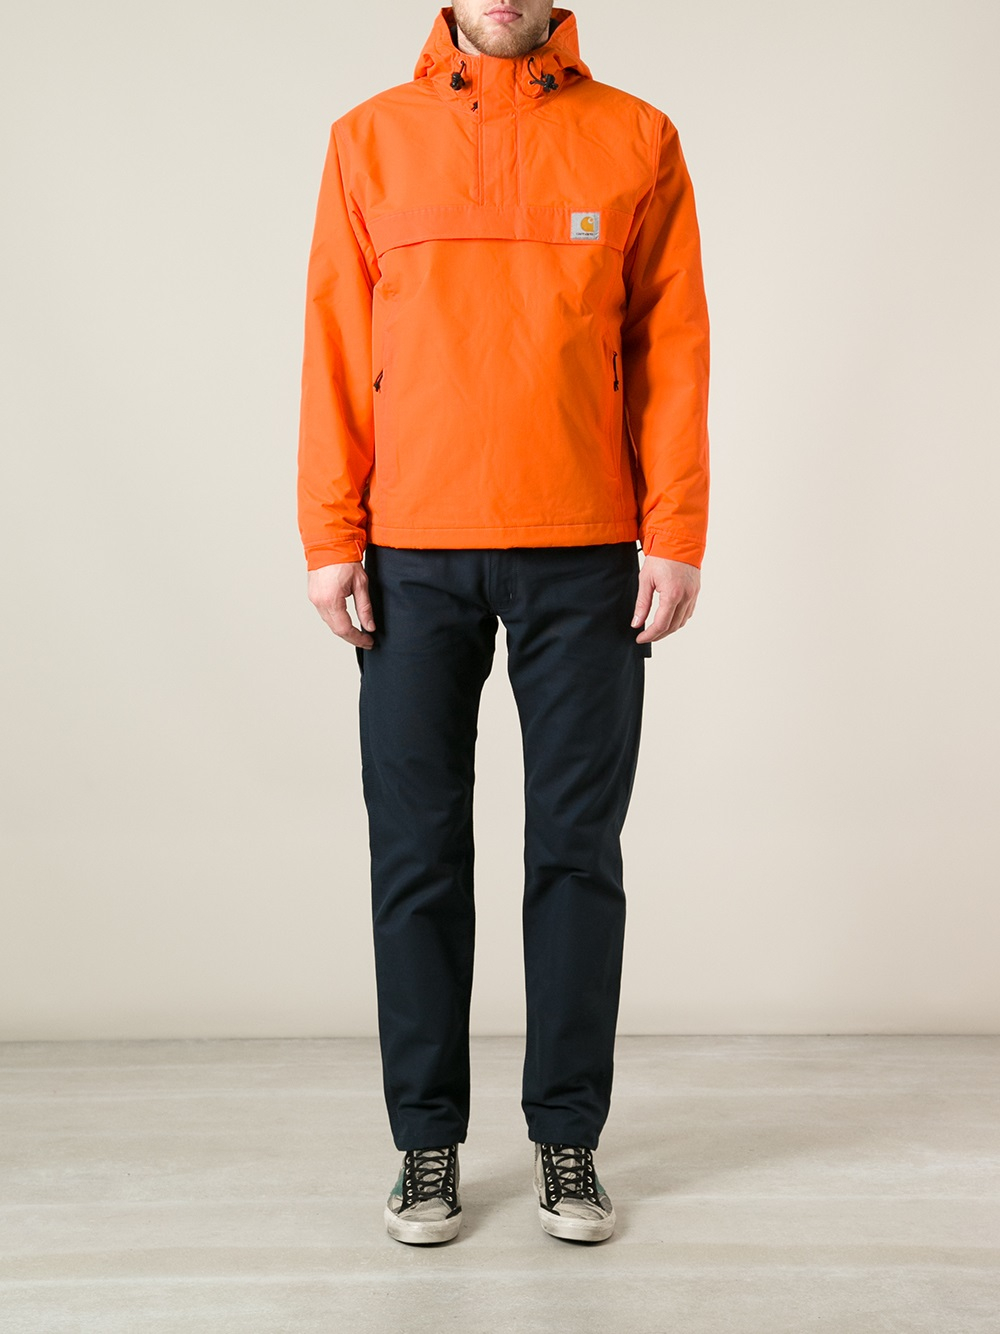 Carhartt Nimbus Pullover Jacket in Yellow & Orange (Orange) for Men - Lyst